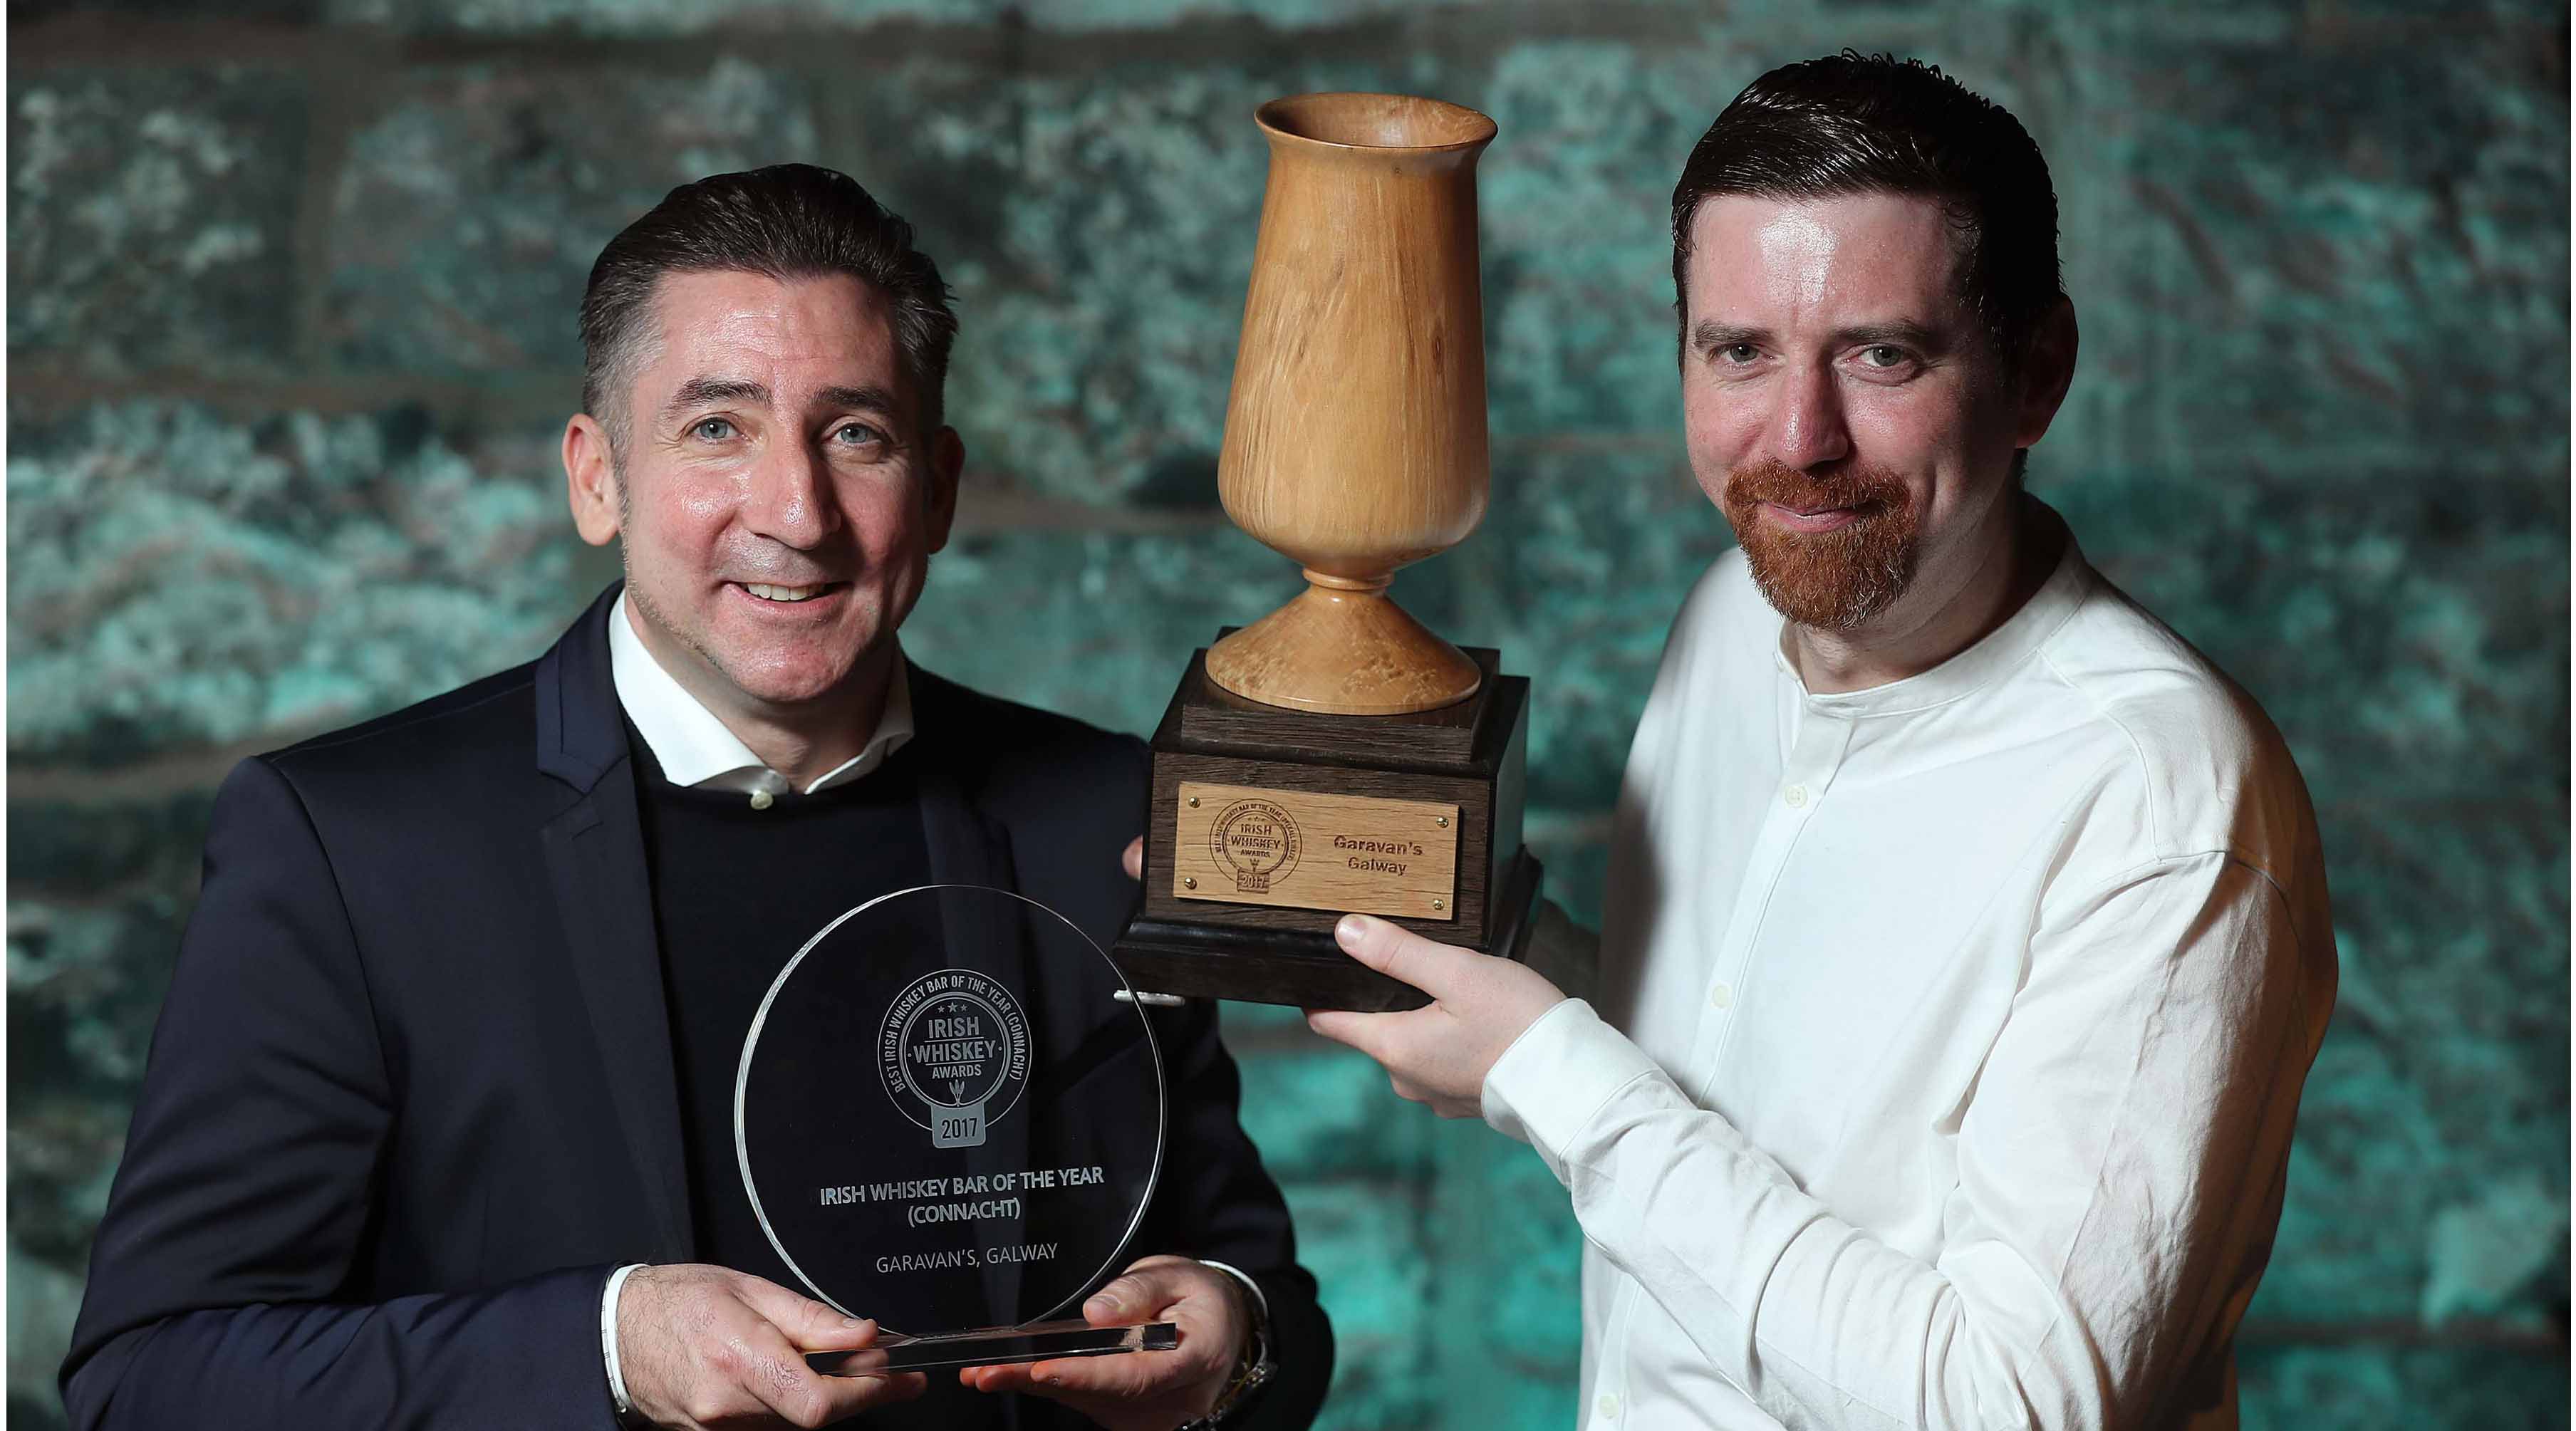 Overall Irish Whiskey Bar of the Year Award winners (from left): Paul Garavan and Darren Green both from Garavan’s in Galway at the 2017 Irish Whiskey Awards held in the Jameson Distillery, Bow Street, Dublin, last night.